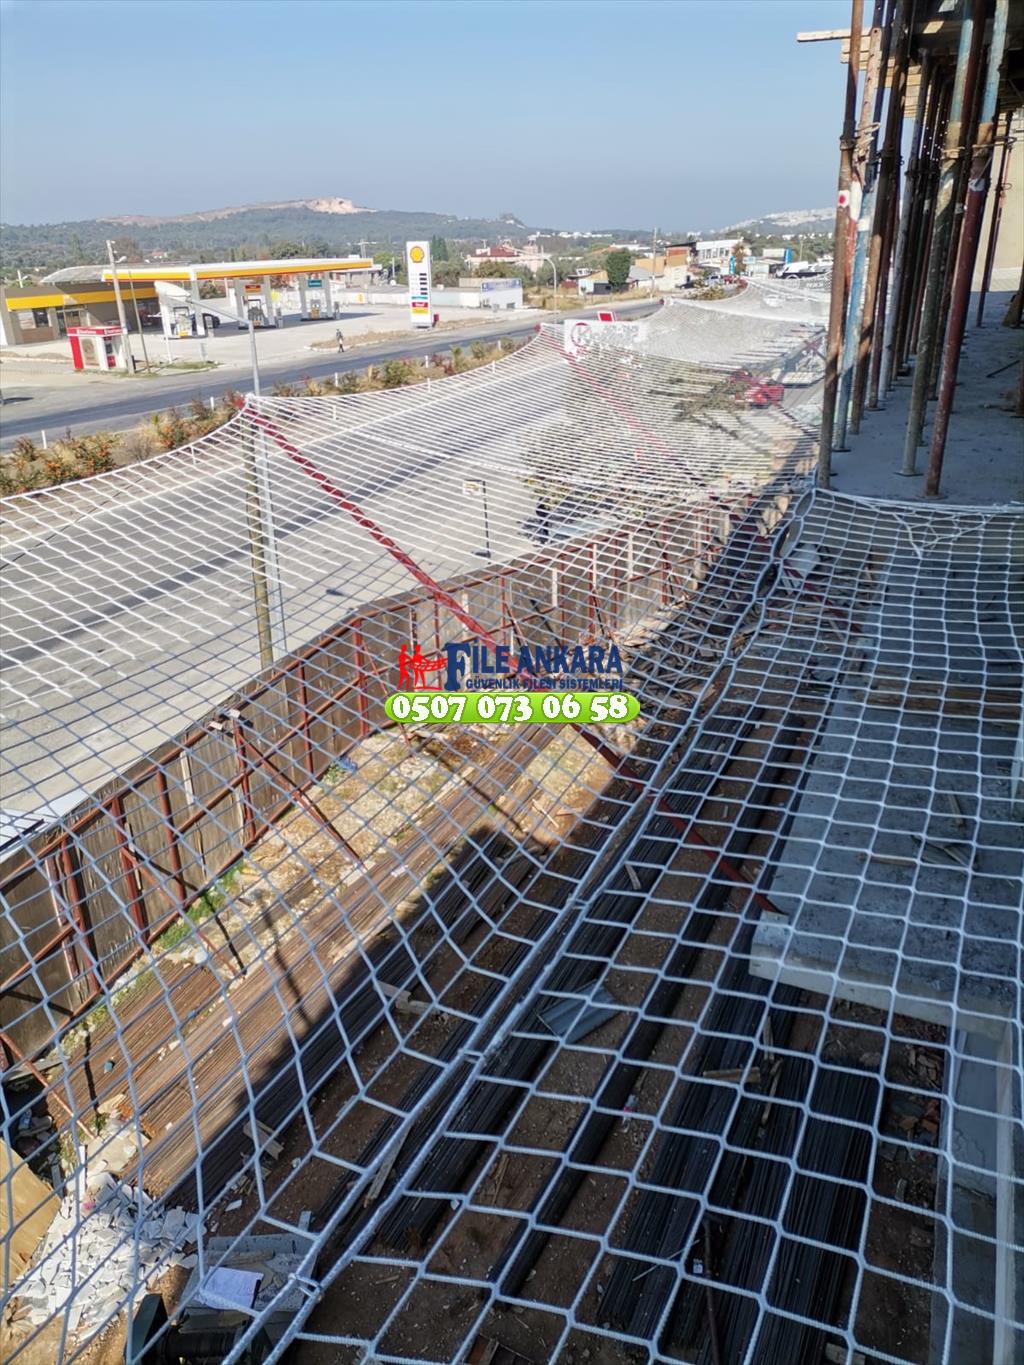 İzmir narlıdere inşaat filesi 0507 073 06 58